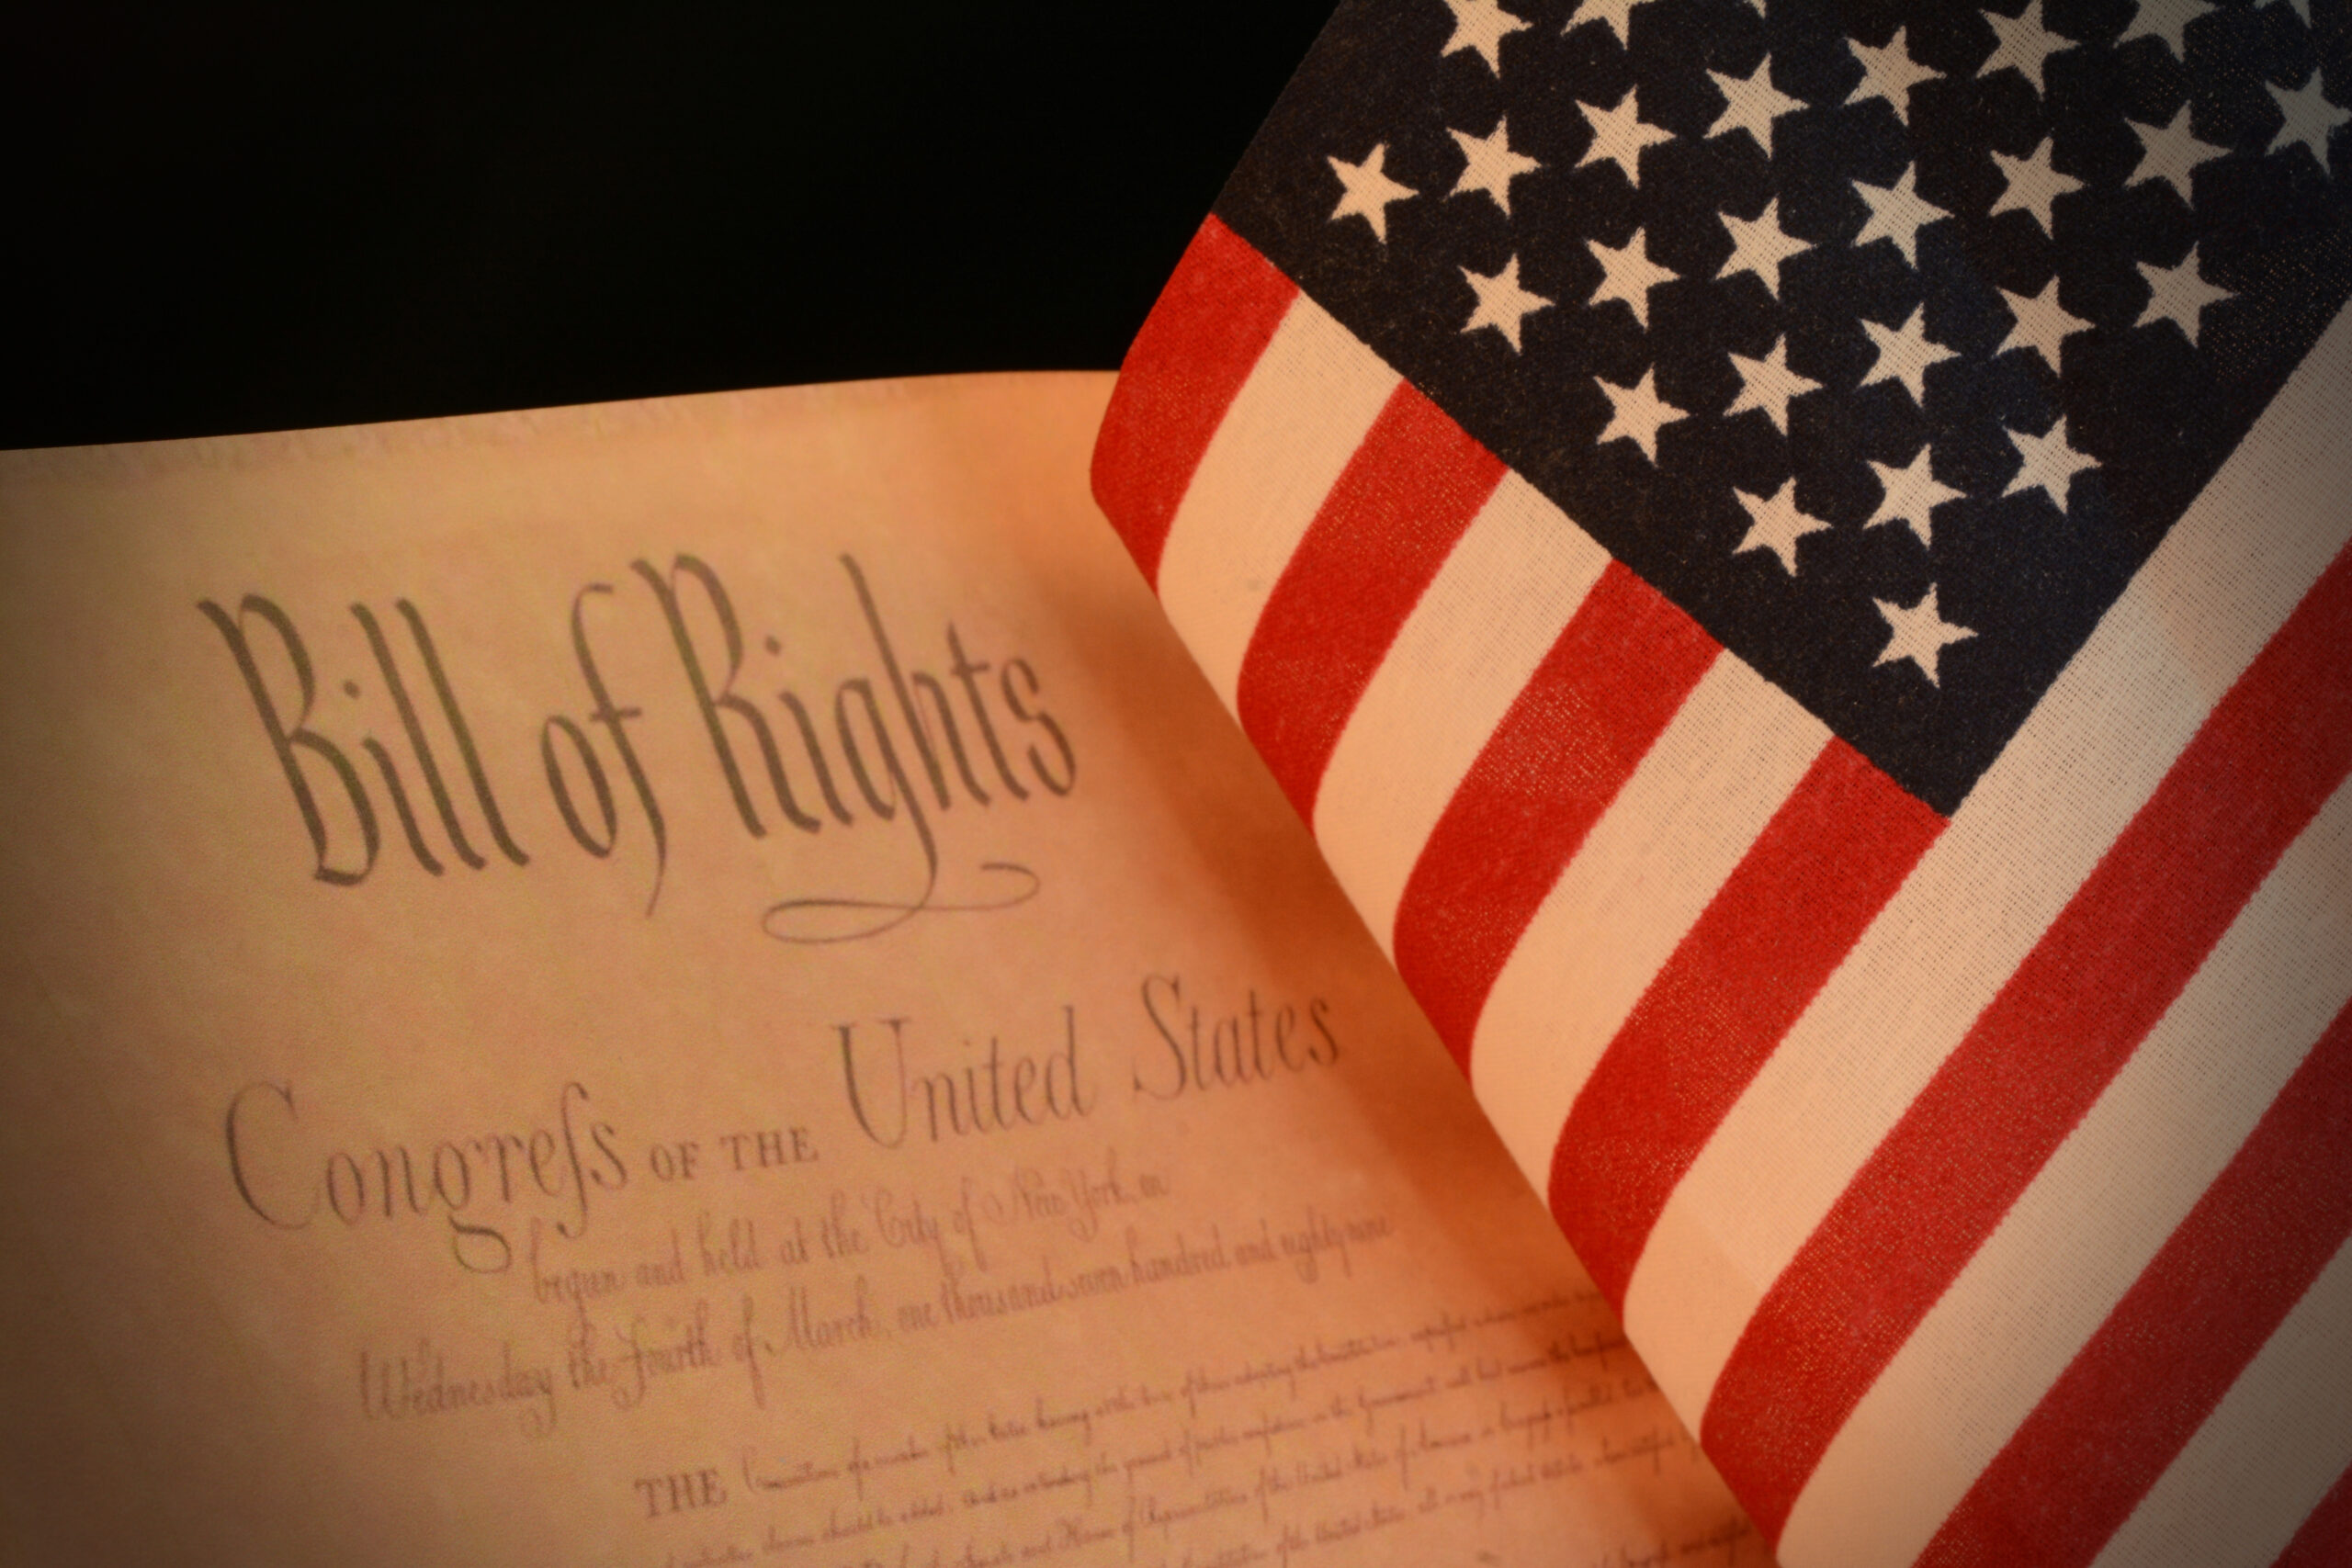 American Bill of Rights